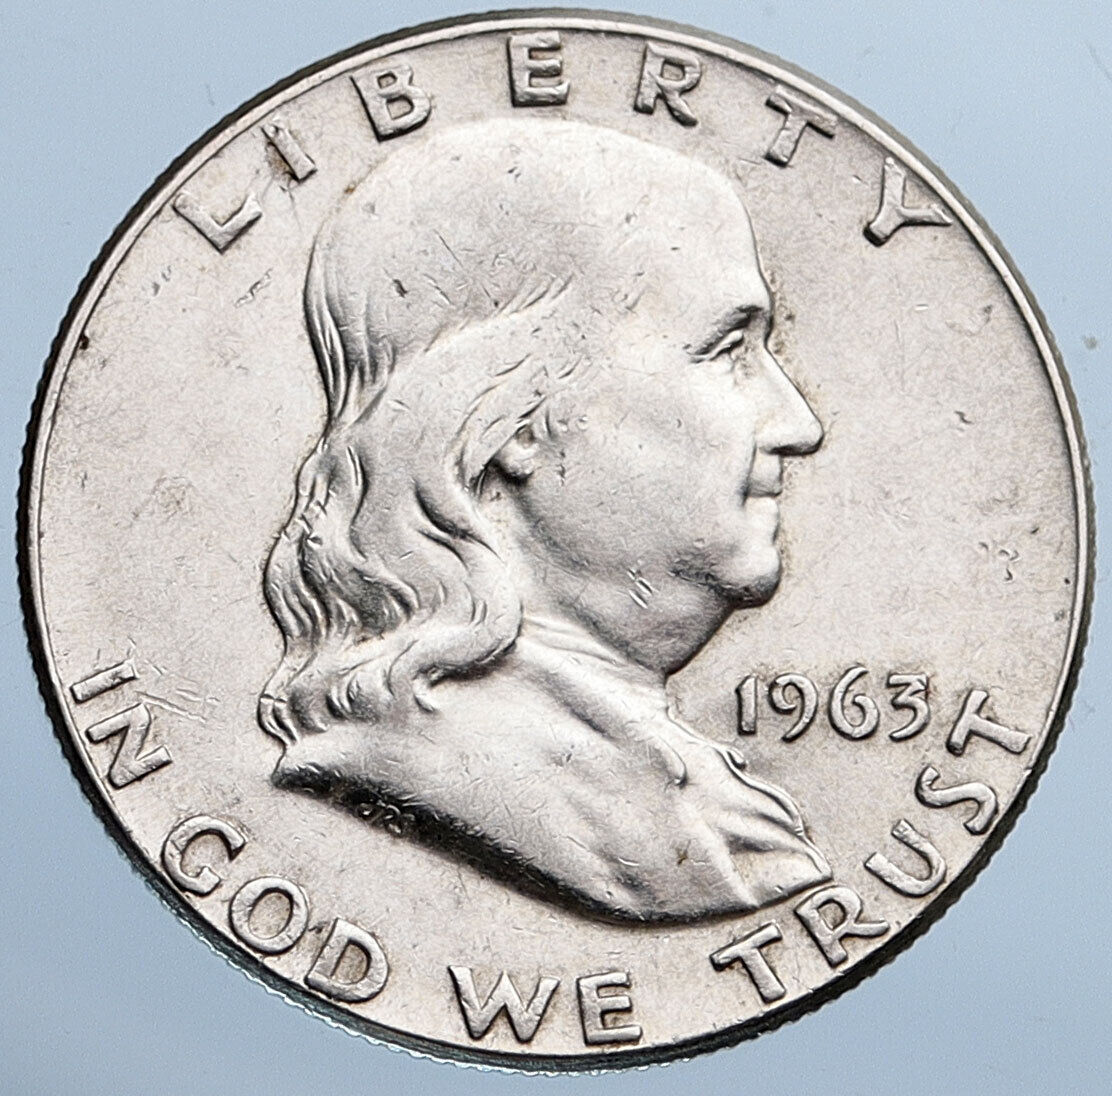 1963 P US Benjamin Franklin LIBERTY BELL Proof Silver Half Dollar Coin i115305